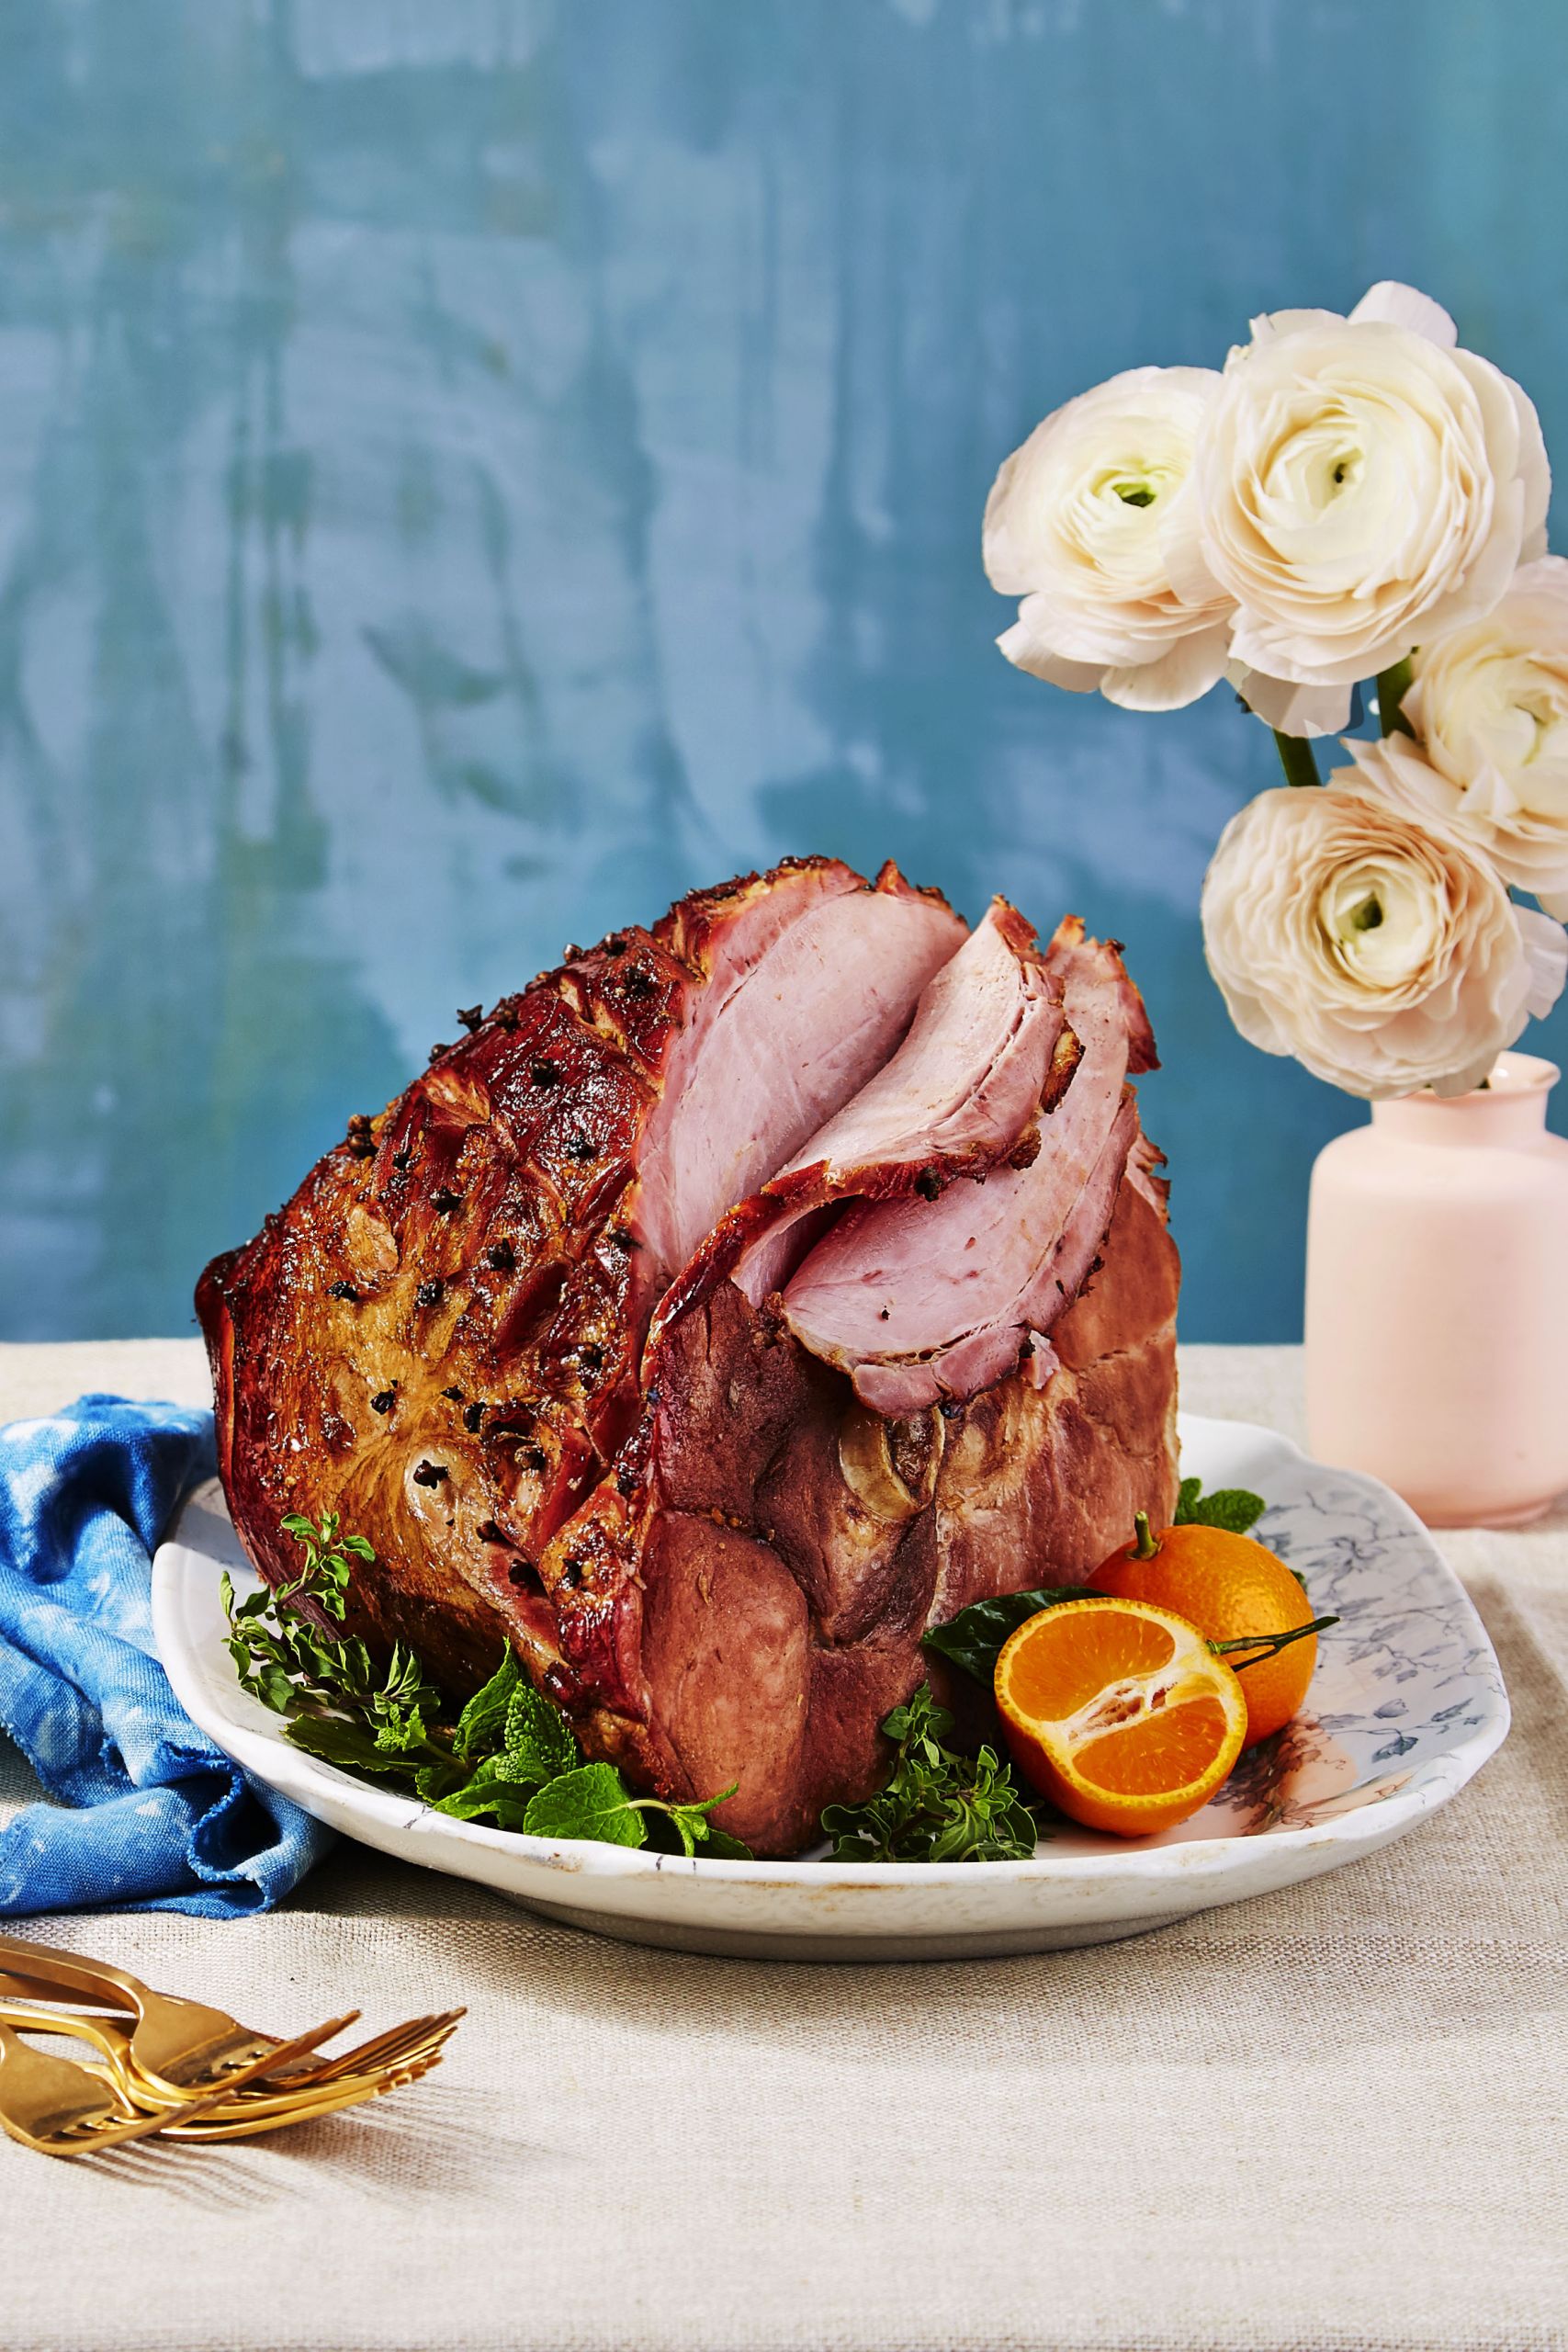 Recipe For Easter Ham
 25 Best Easter Ham Recipes Spiral Cut Ham Glazes and